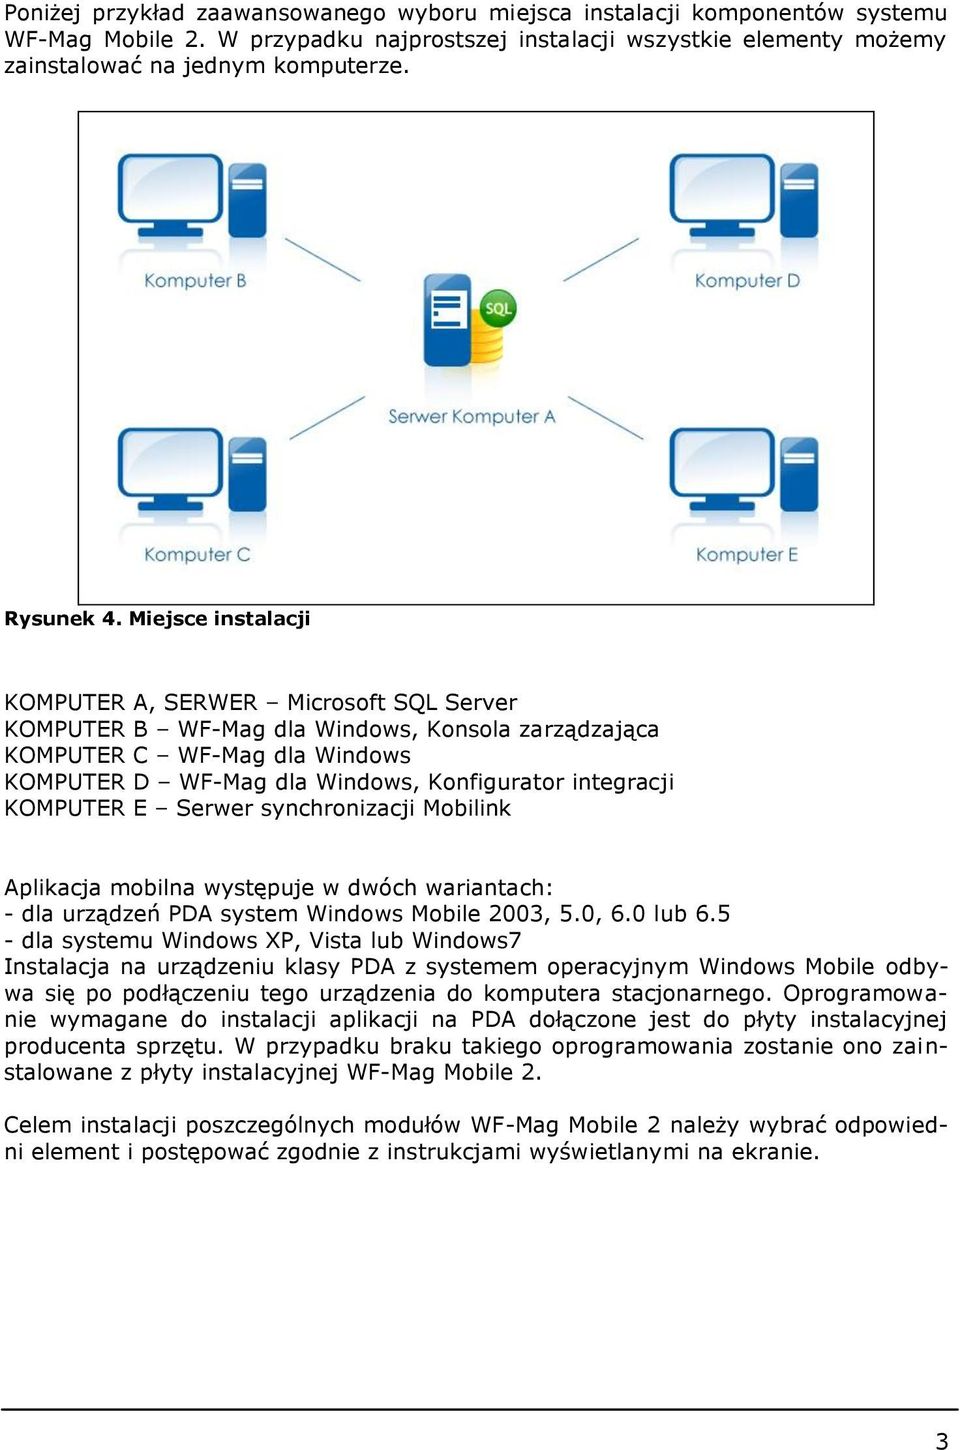 Miejsce instalacji KOMPUTER A, SERWER Microsoft SQL Server KOMPUTER B WF-Mag dla Windows, Konsola zarządzająca KOMPUTER C WF-Mag dla Windows KOMPUTER D WF-Mag dla Windows, Konfigurator integracji